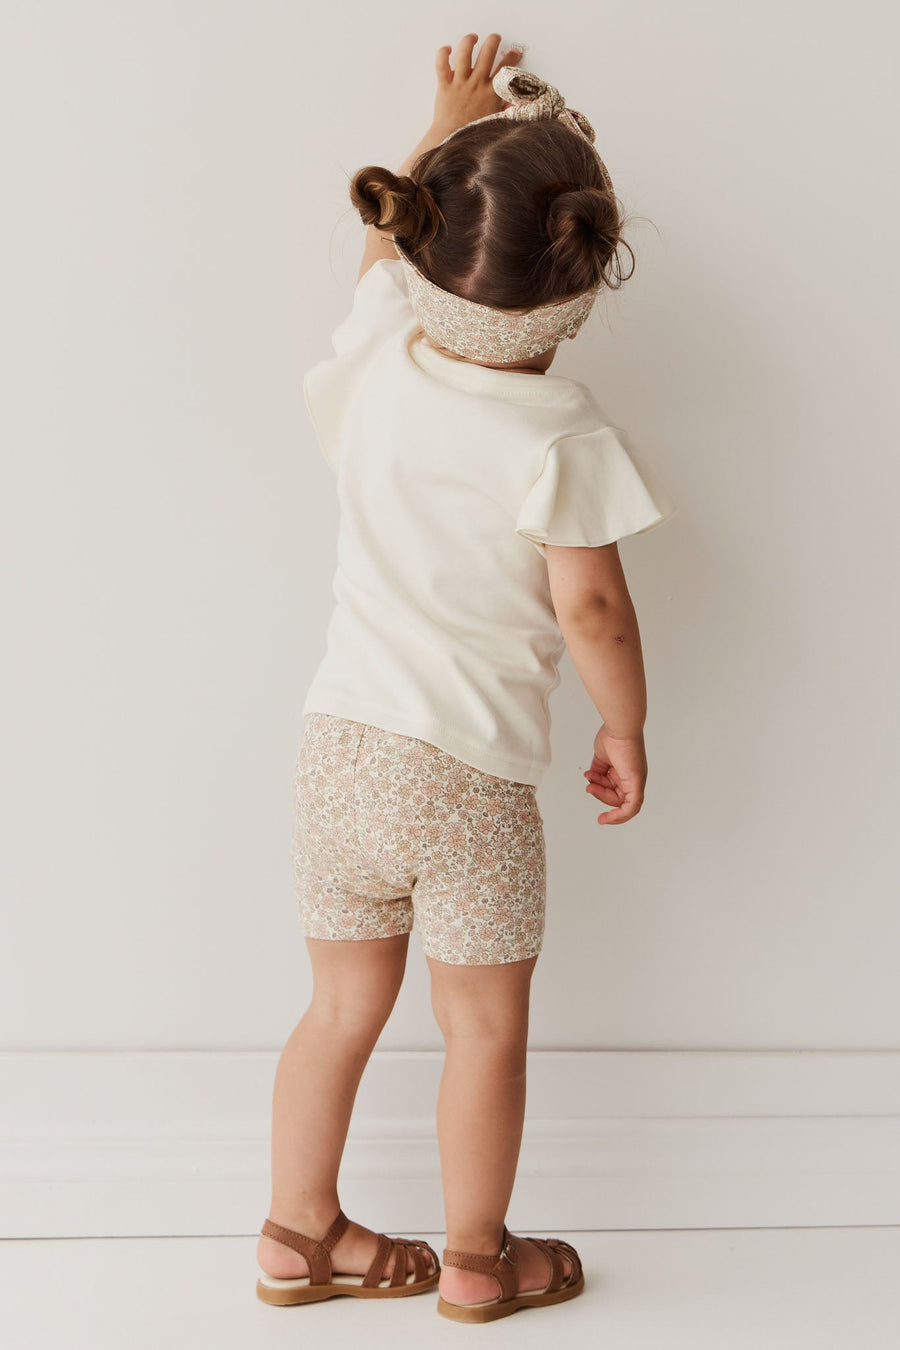 Organic Cotton Everyday Bike Short - Chloe Egret Childrens Short from Jamie Kay USA